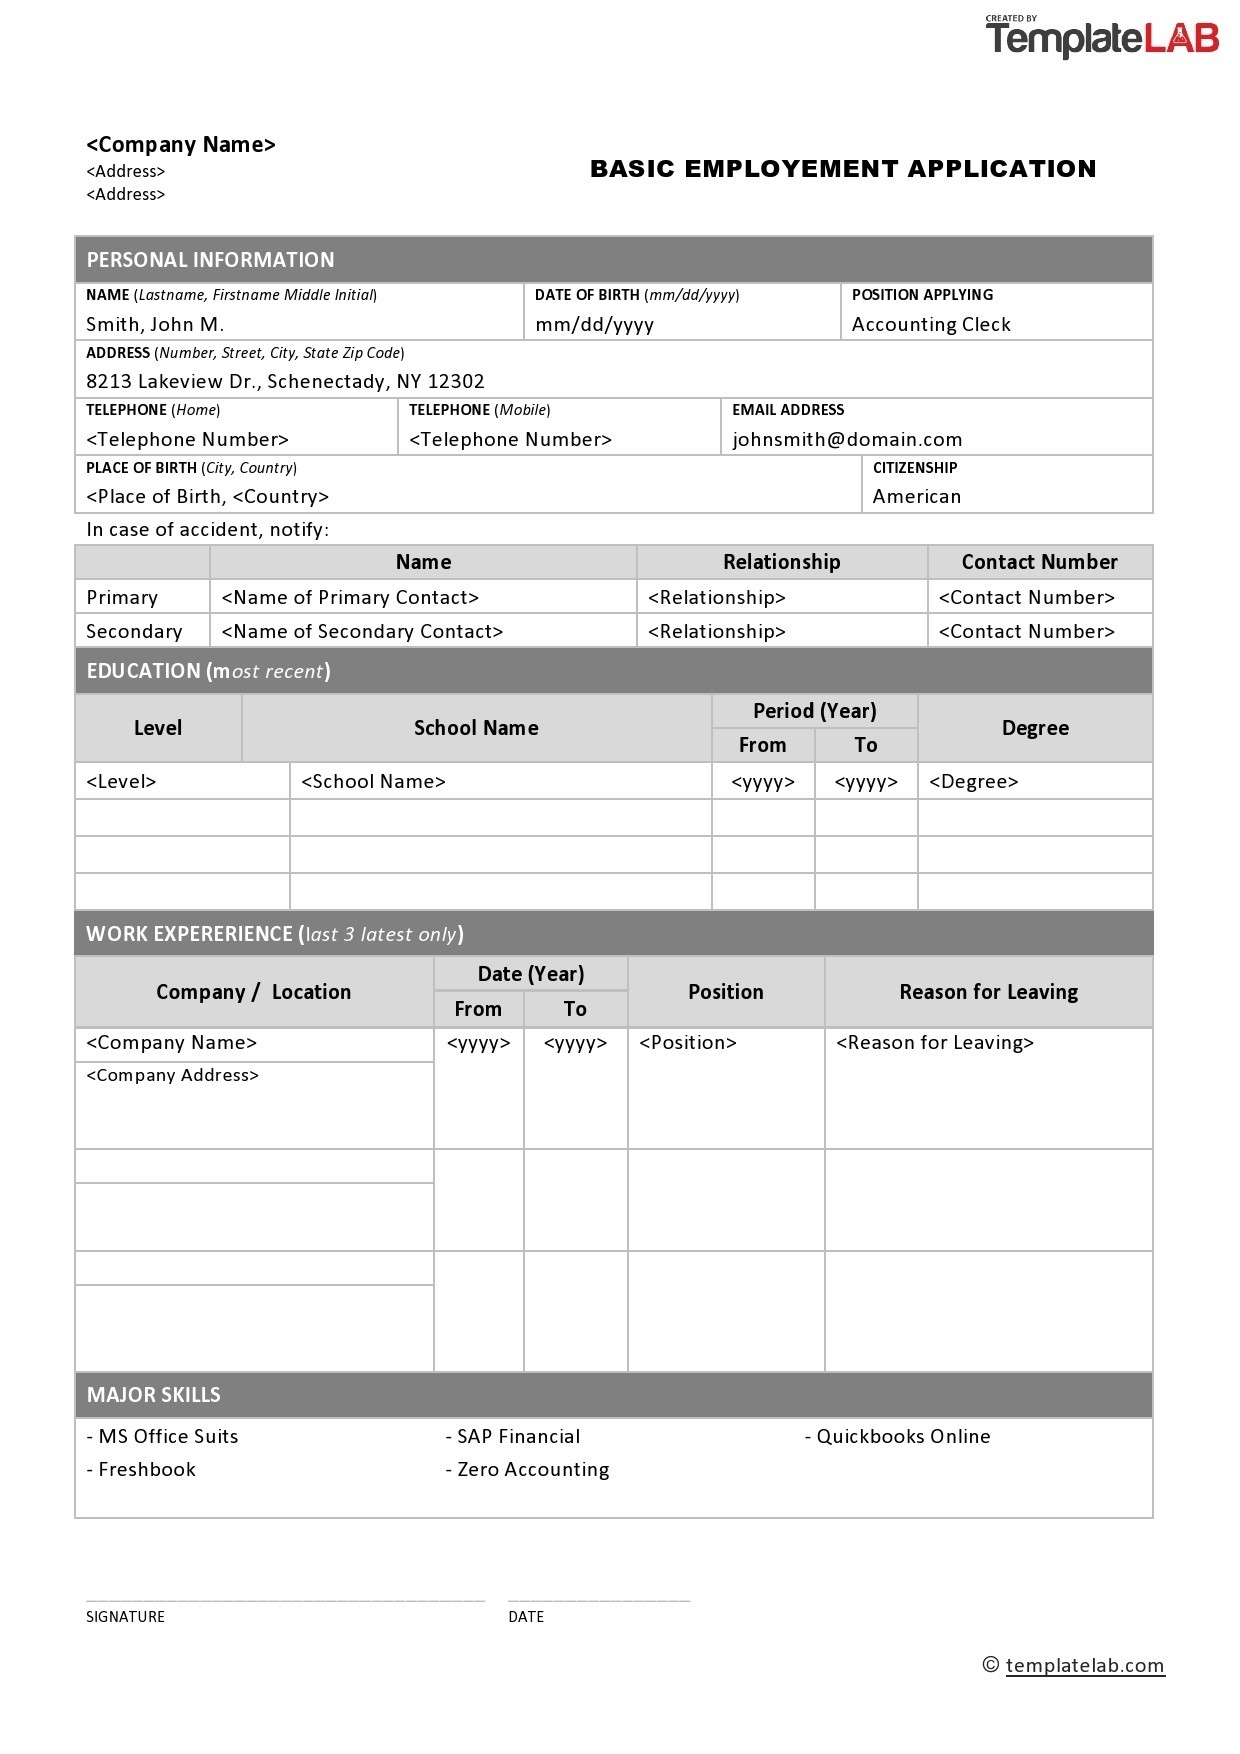 50 Free Employment Job Application Form Templates Printable TemplateLab - Free Online Printable Applications